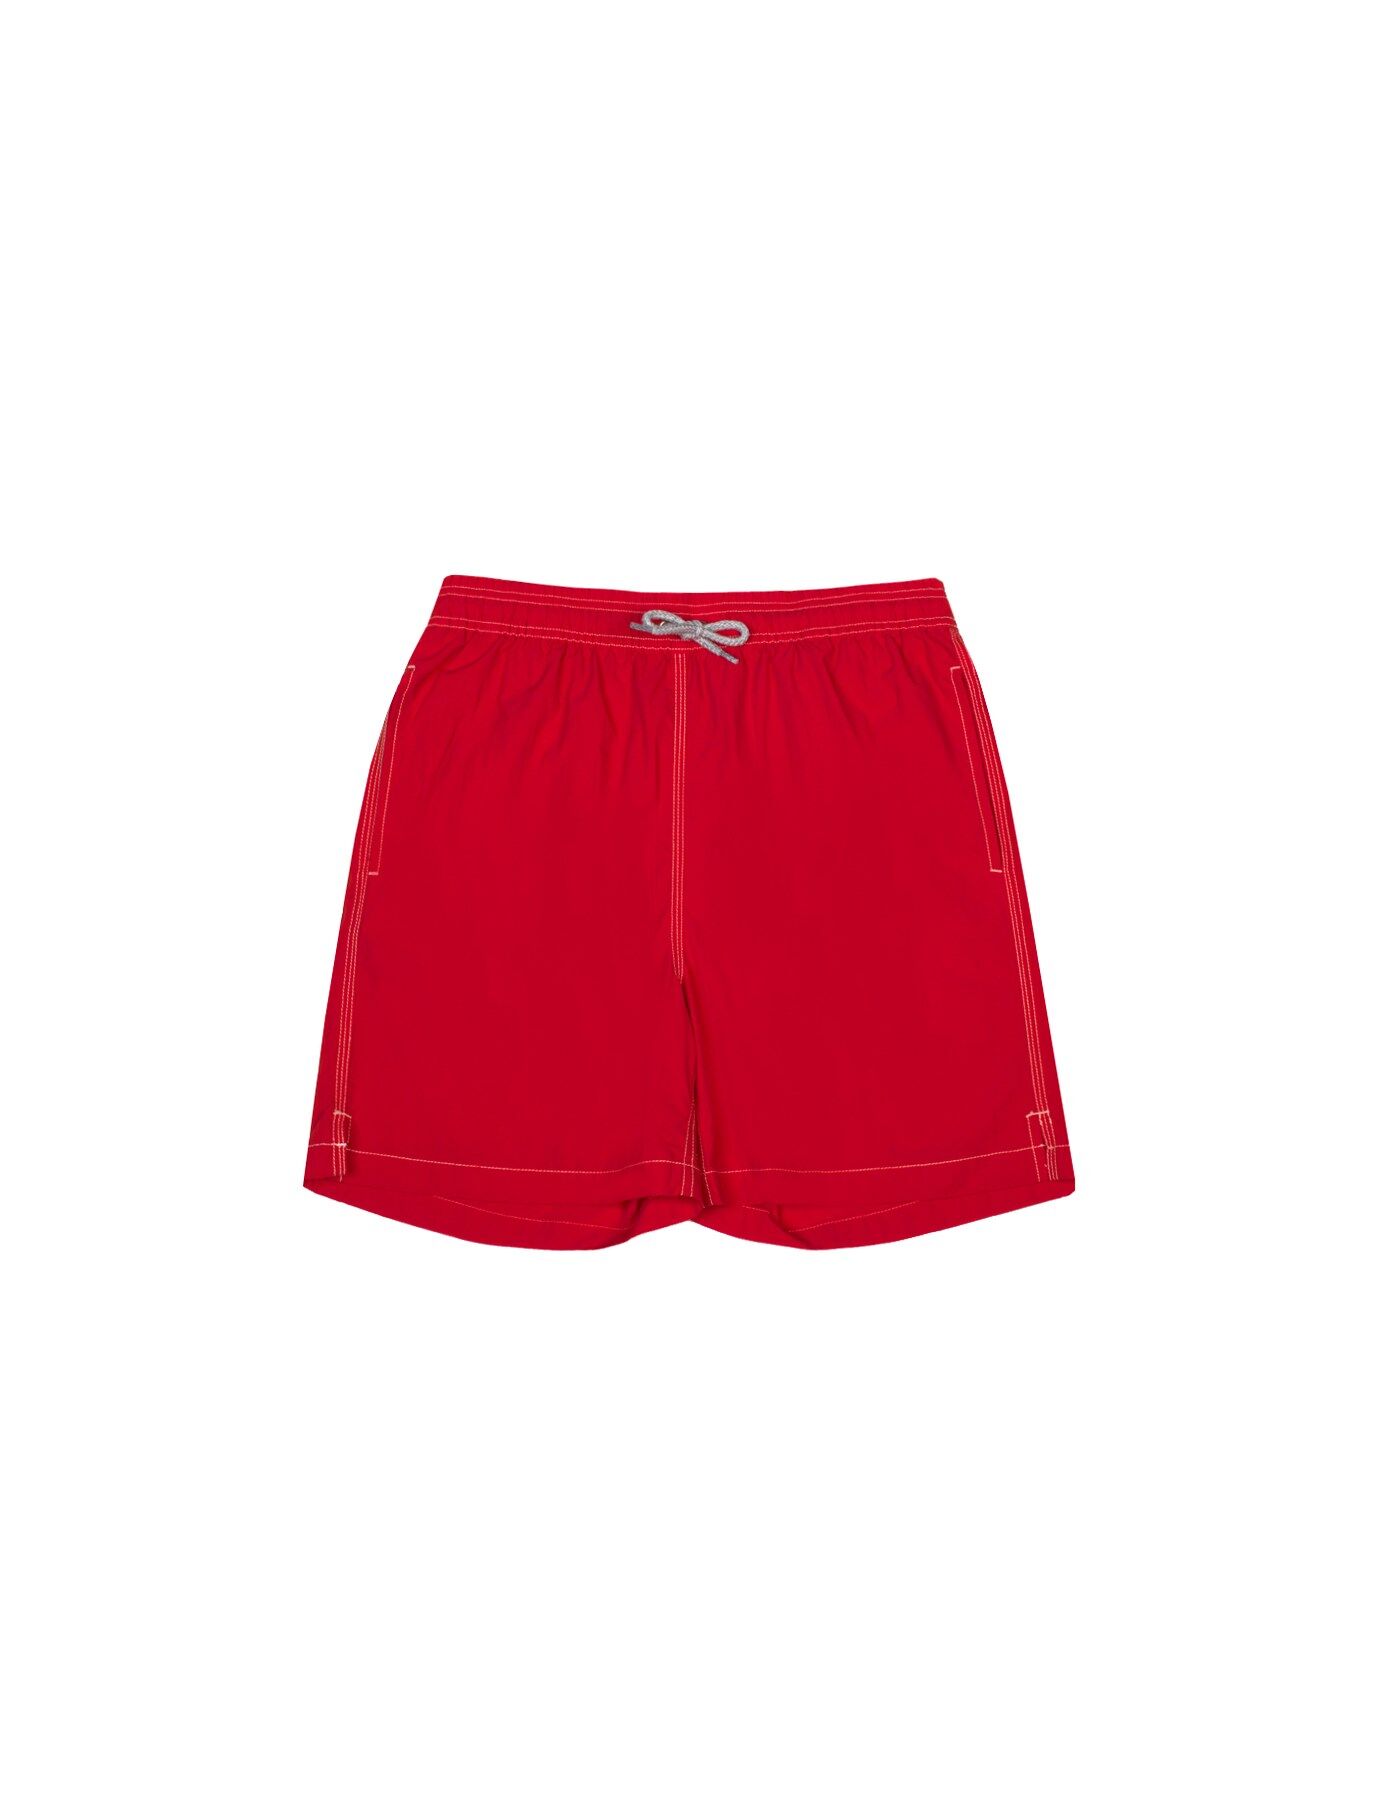 Hawes & Curtis Men's Garment Dye Swim Shorts in Red   2XL   Hawes & Curtis